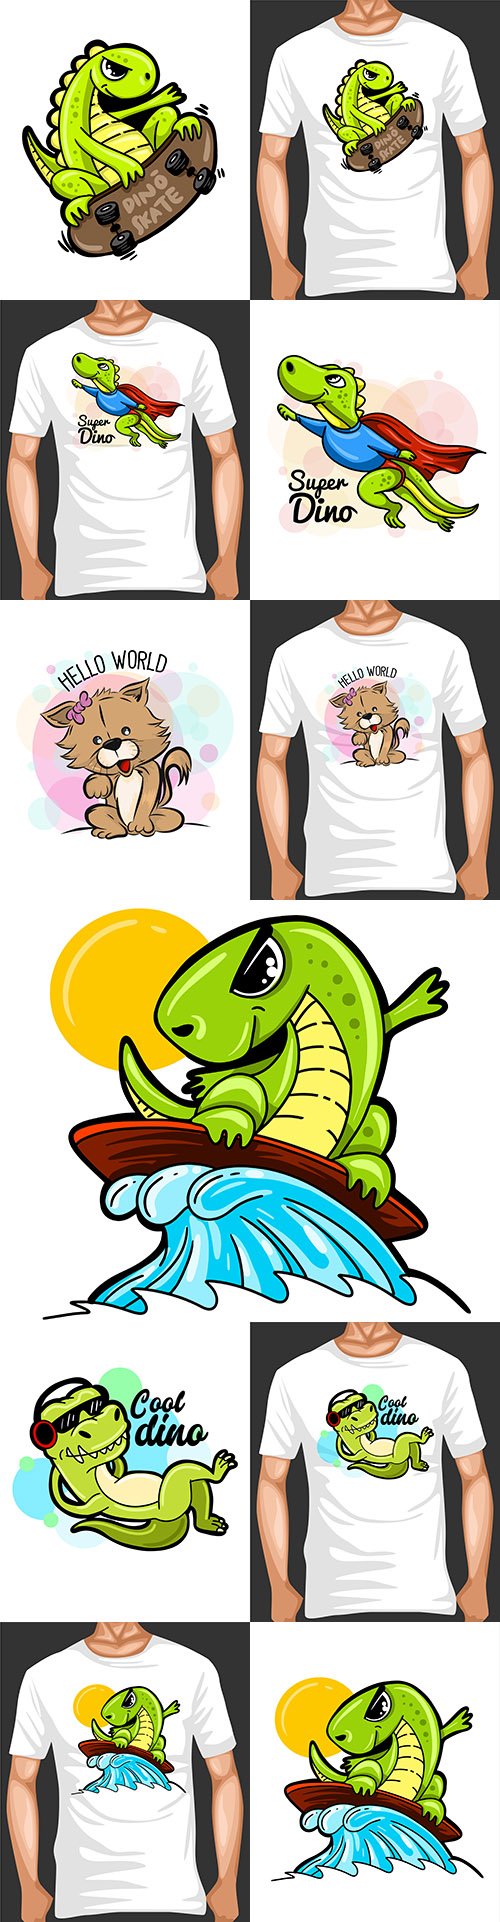 Dinosaur cartoon illustration and merchandising design